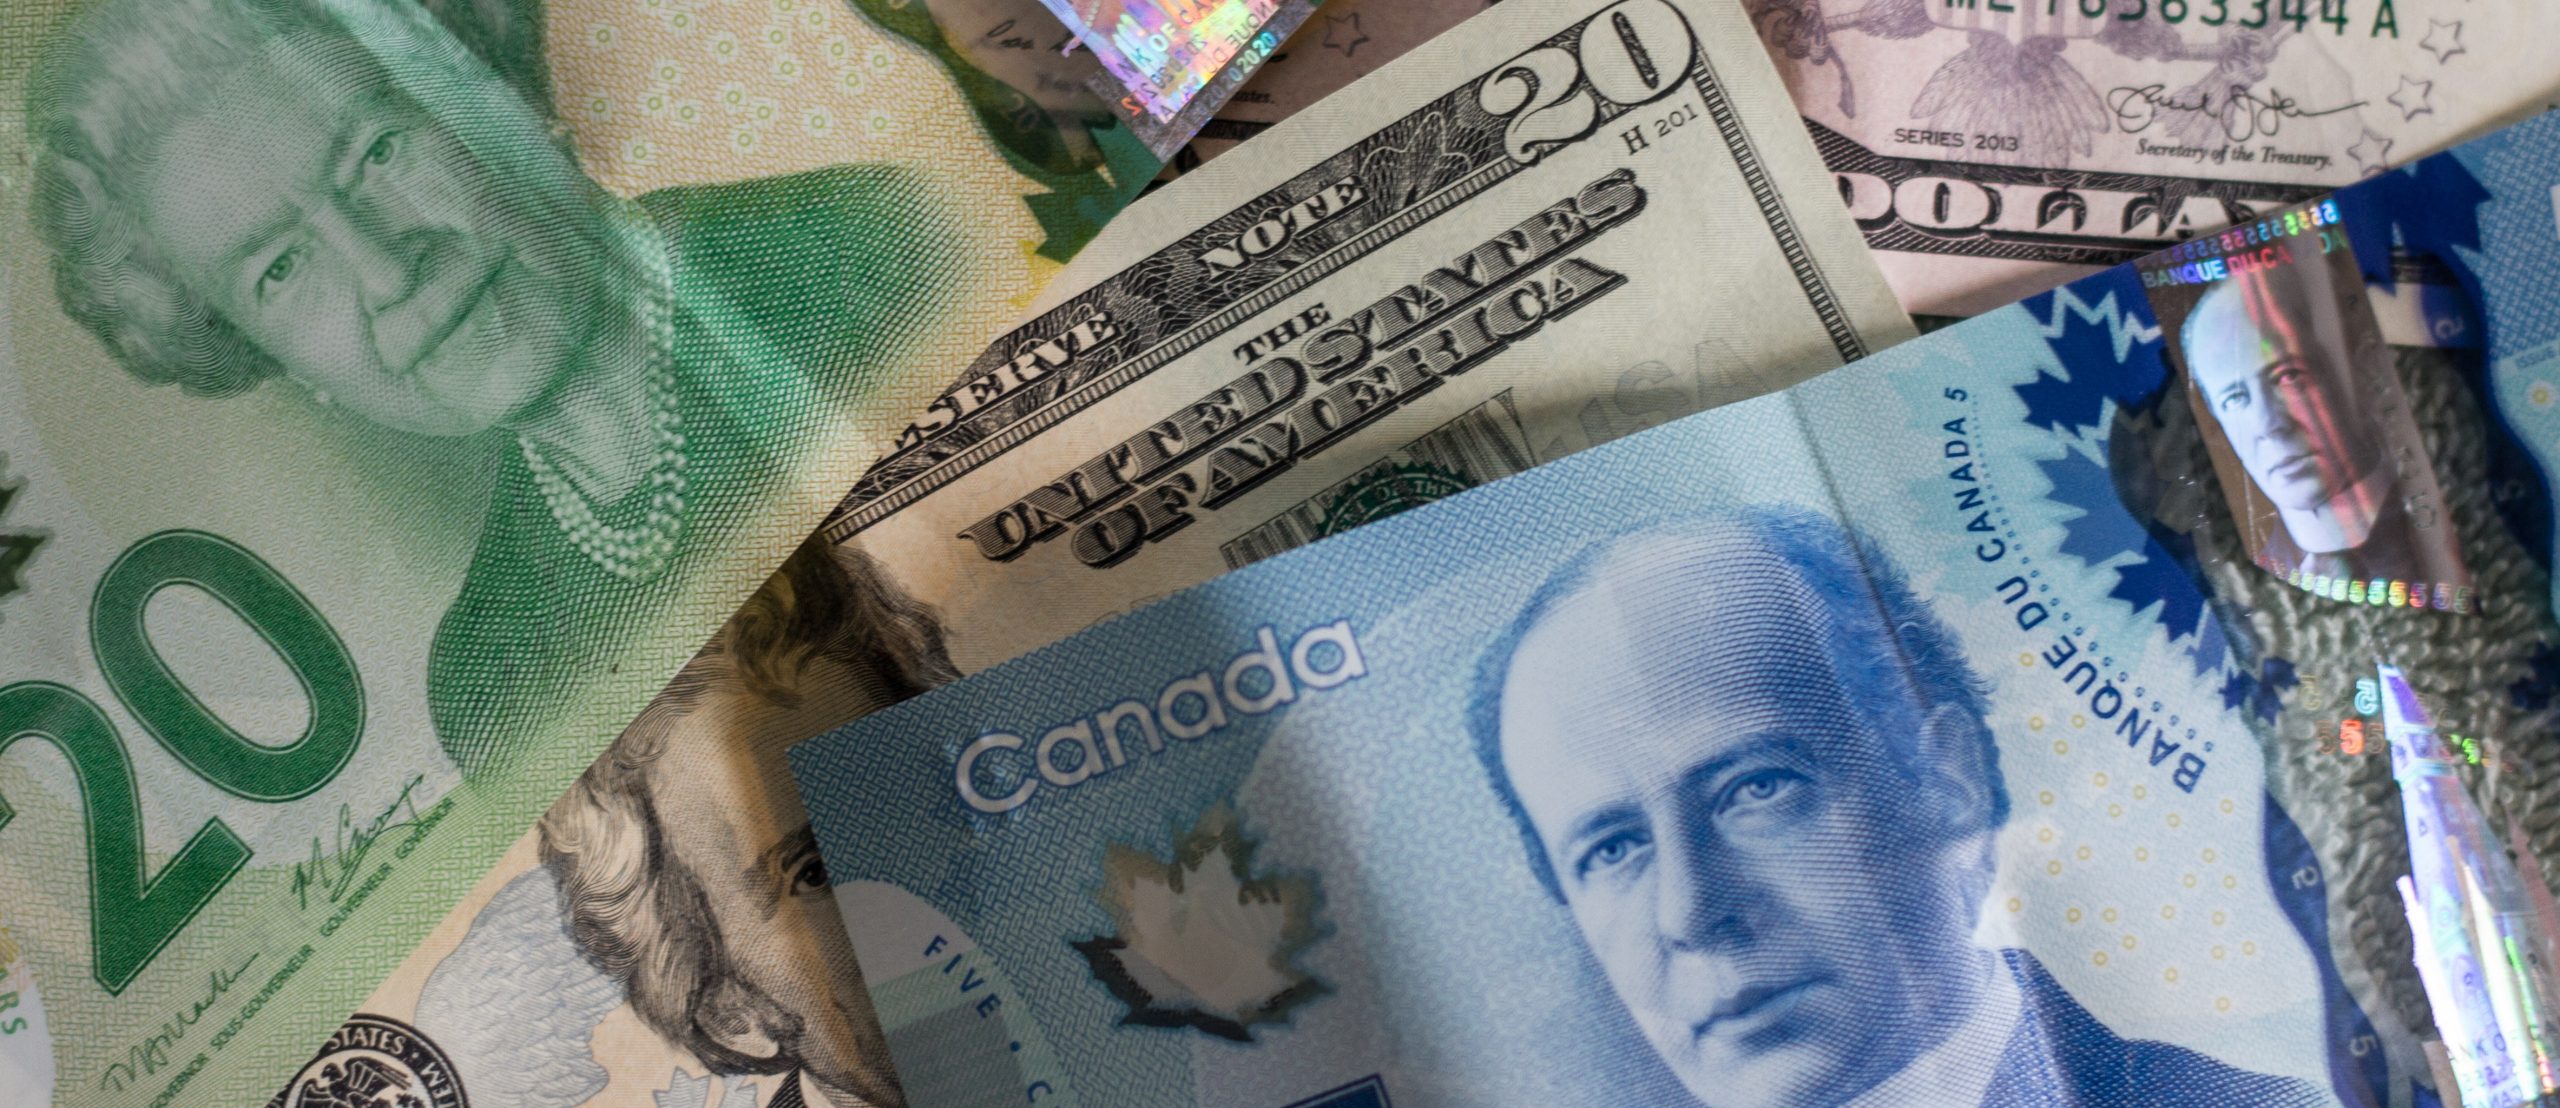 Canadian money in various denominations